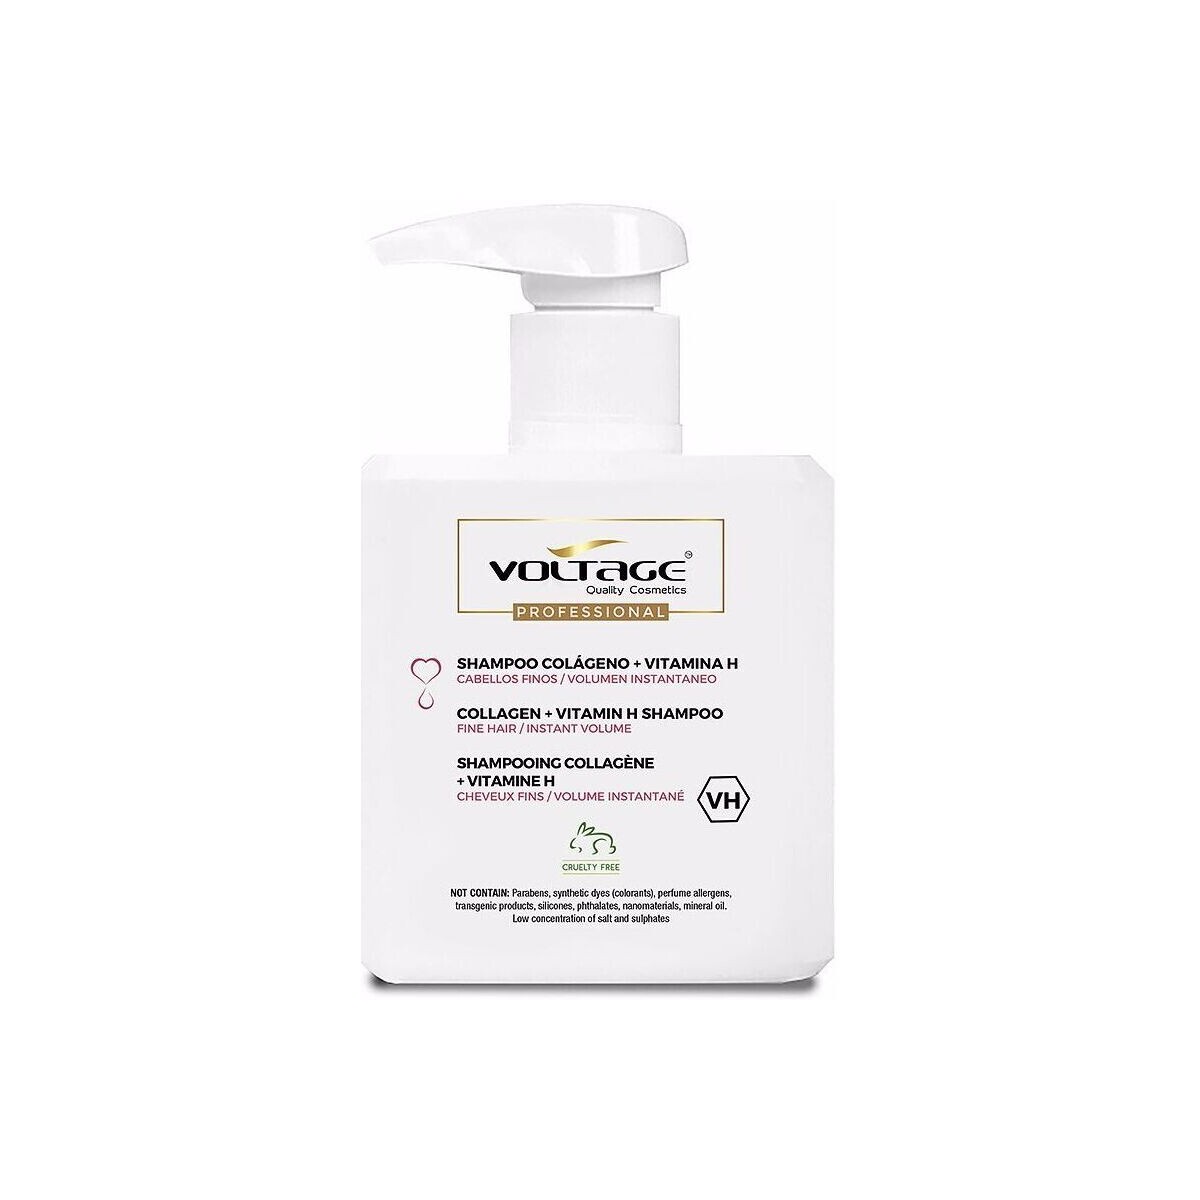 Bellezza Shampoo Voltage Shampoo Collagene + Vitamina H 